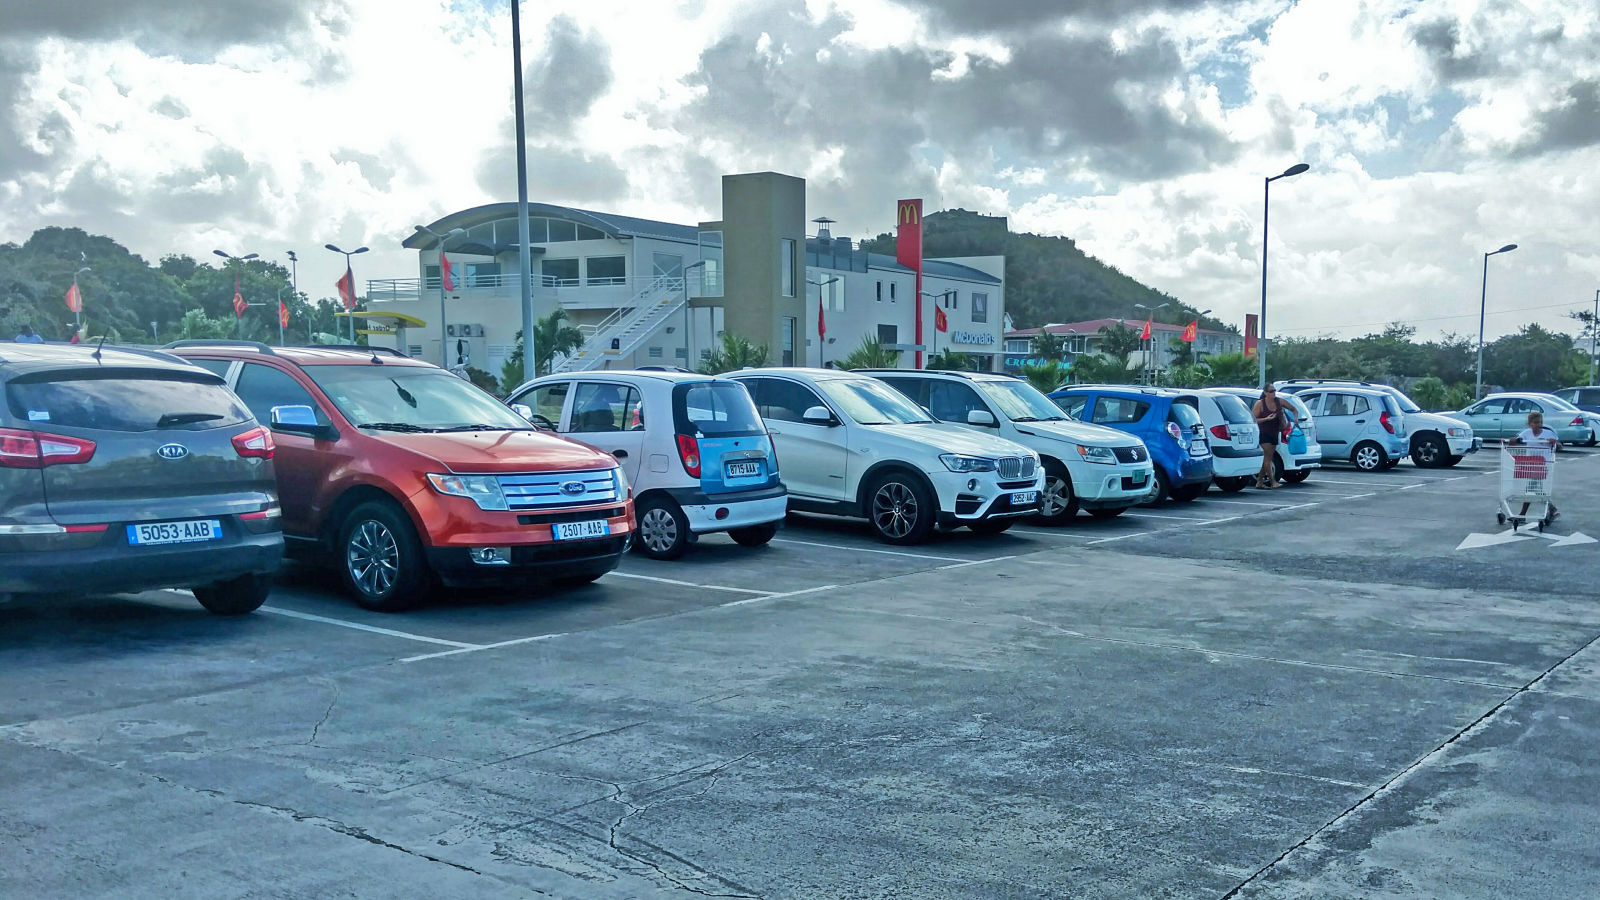 A pretty standard assortment of St. Martin cars at the Super U supermarket in Marigot